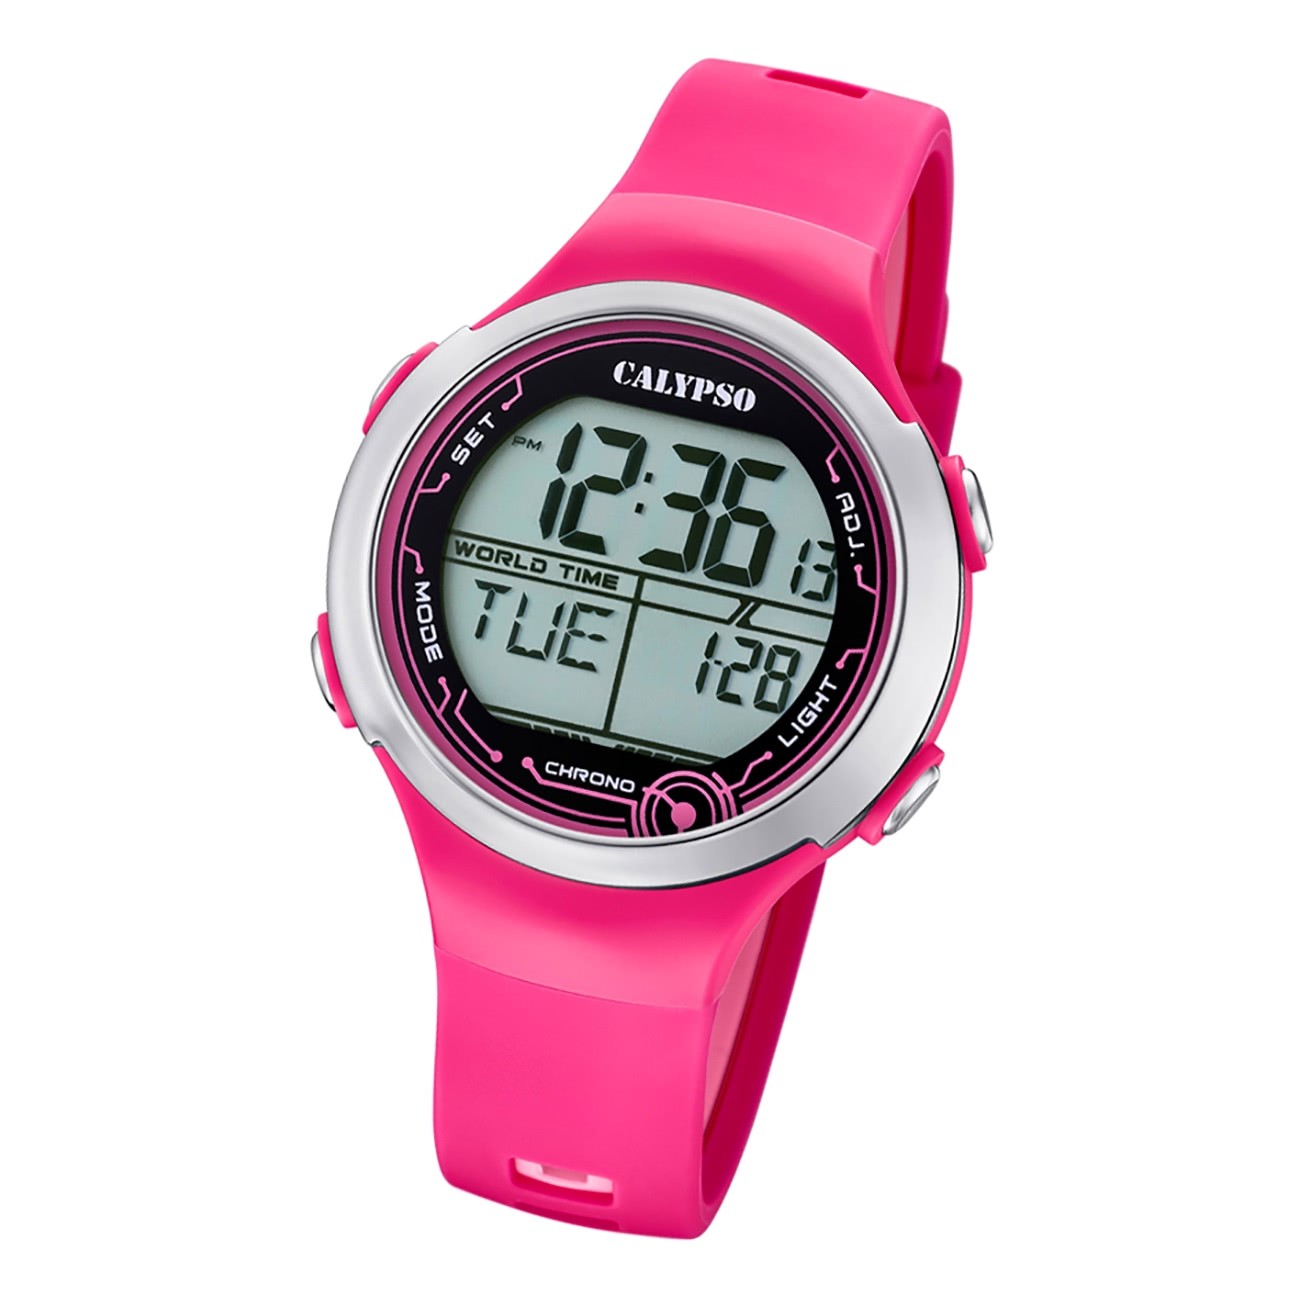 Calypso Damen Armbanduhr Fashion K5799/3 Digital Kunststoff pink UK5799/3